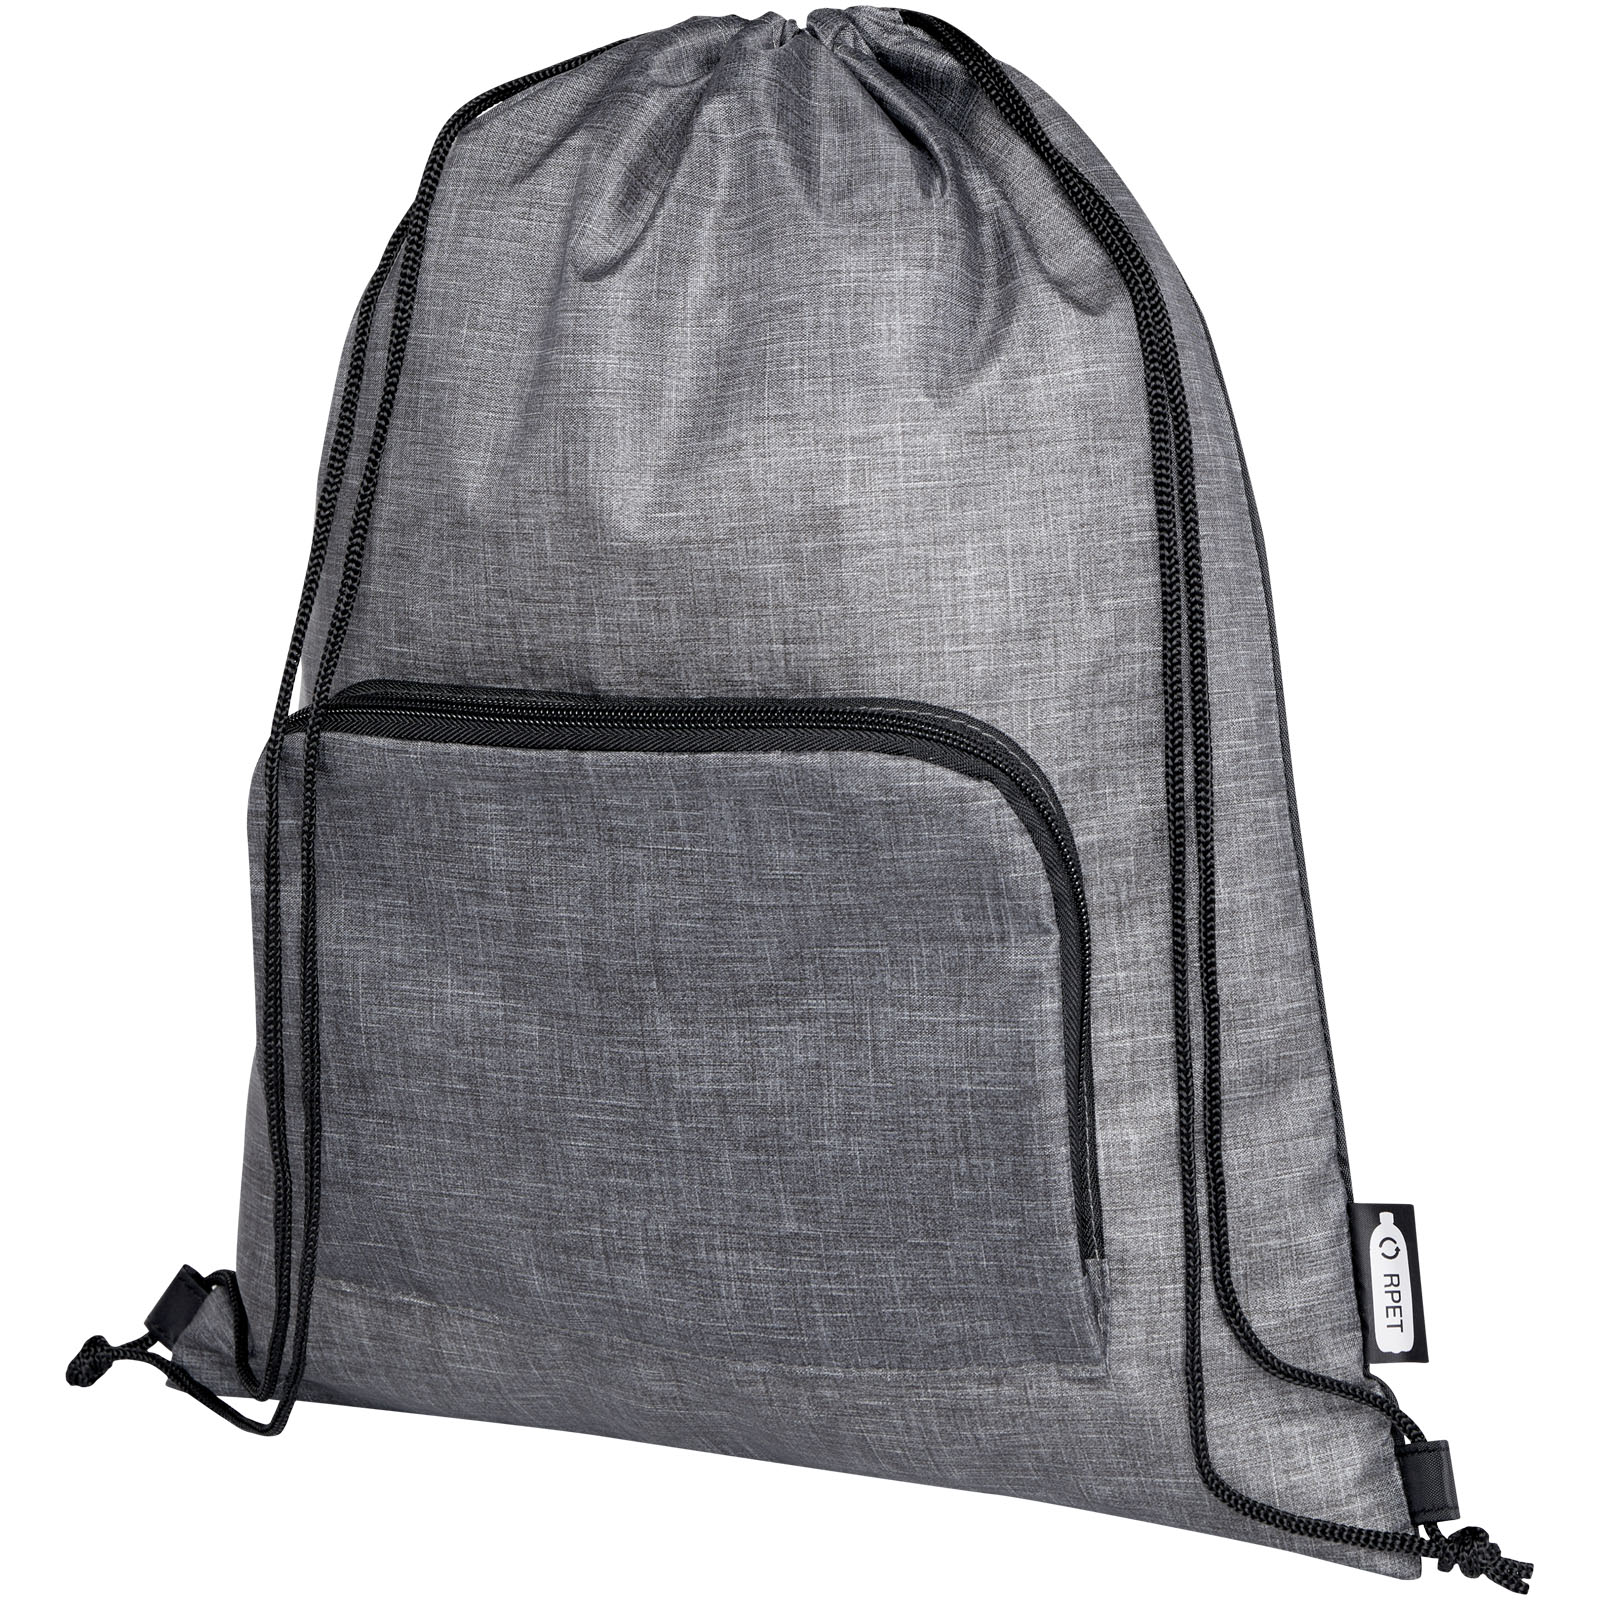 Advertising Drawstring Bags - Ash recycled foldable drawstring bag 7L